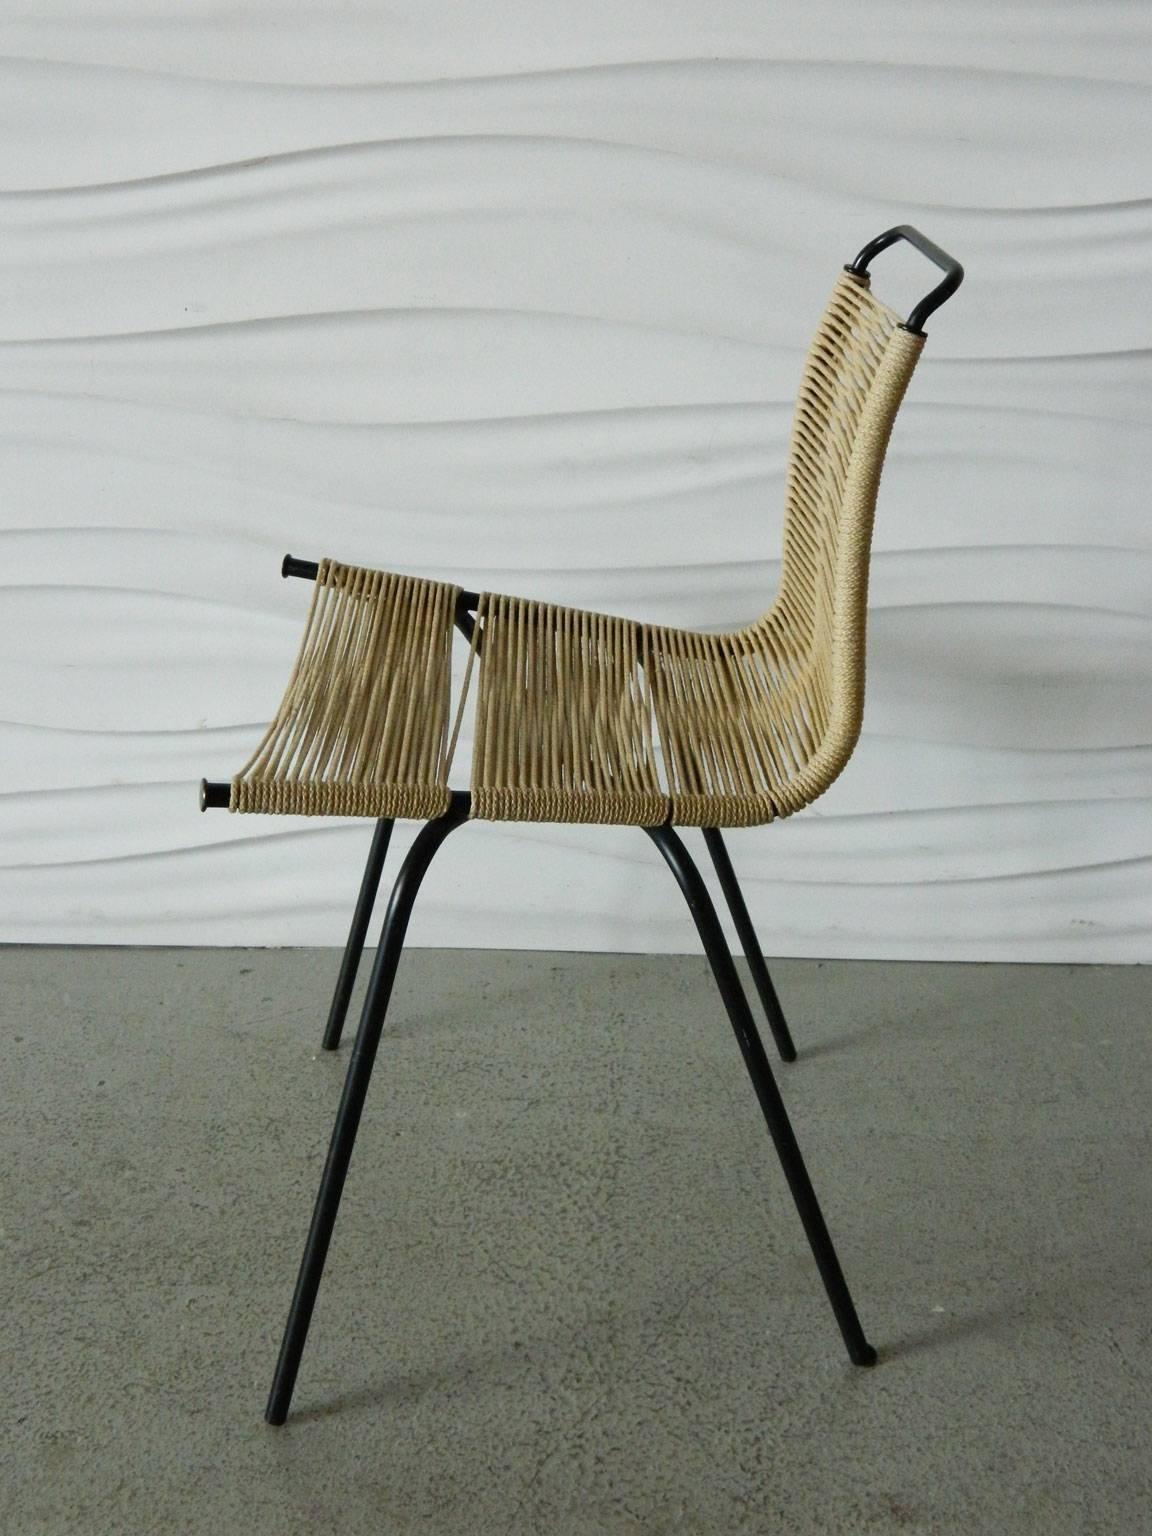 Designed in 1956, this Paul Kjaerholm PK-1 chair has its original roping and painted metal finish.